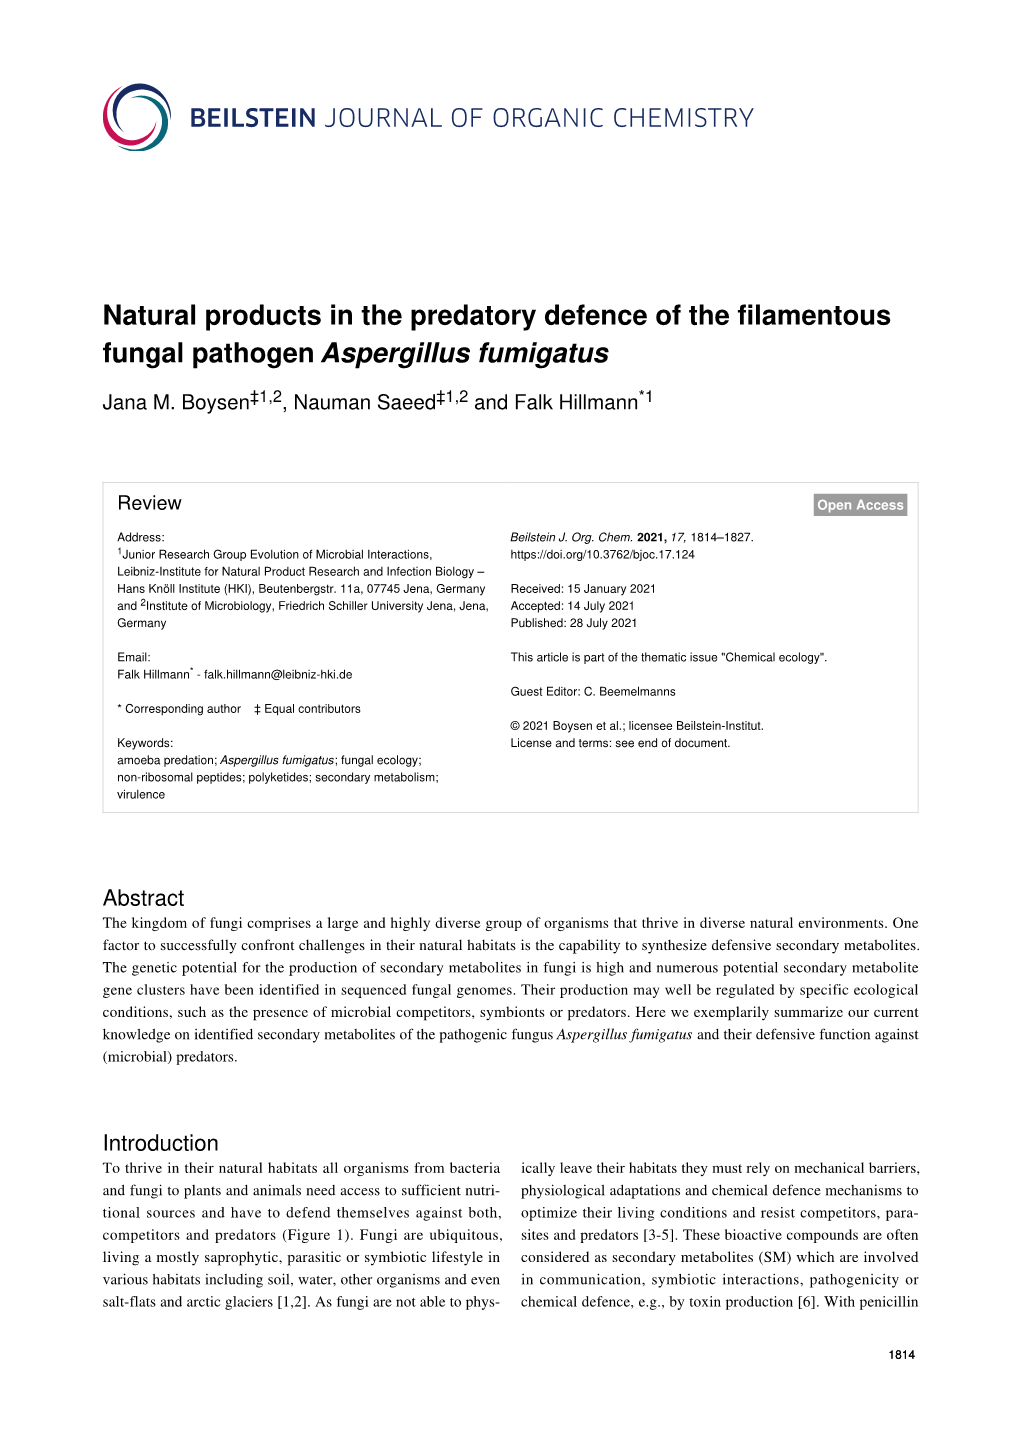 Natural Products in the Predatory Defence of the Filamentous Fungal Pathogen Aspergillus Fumigatus